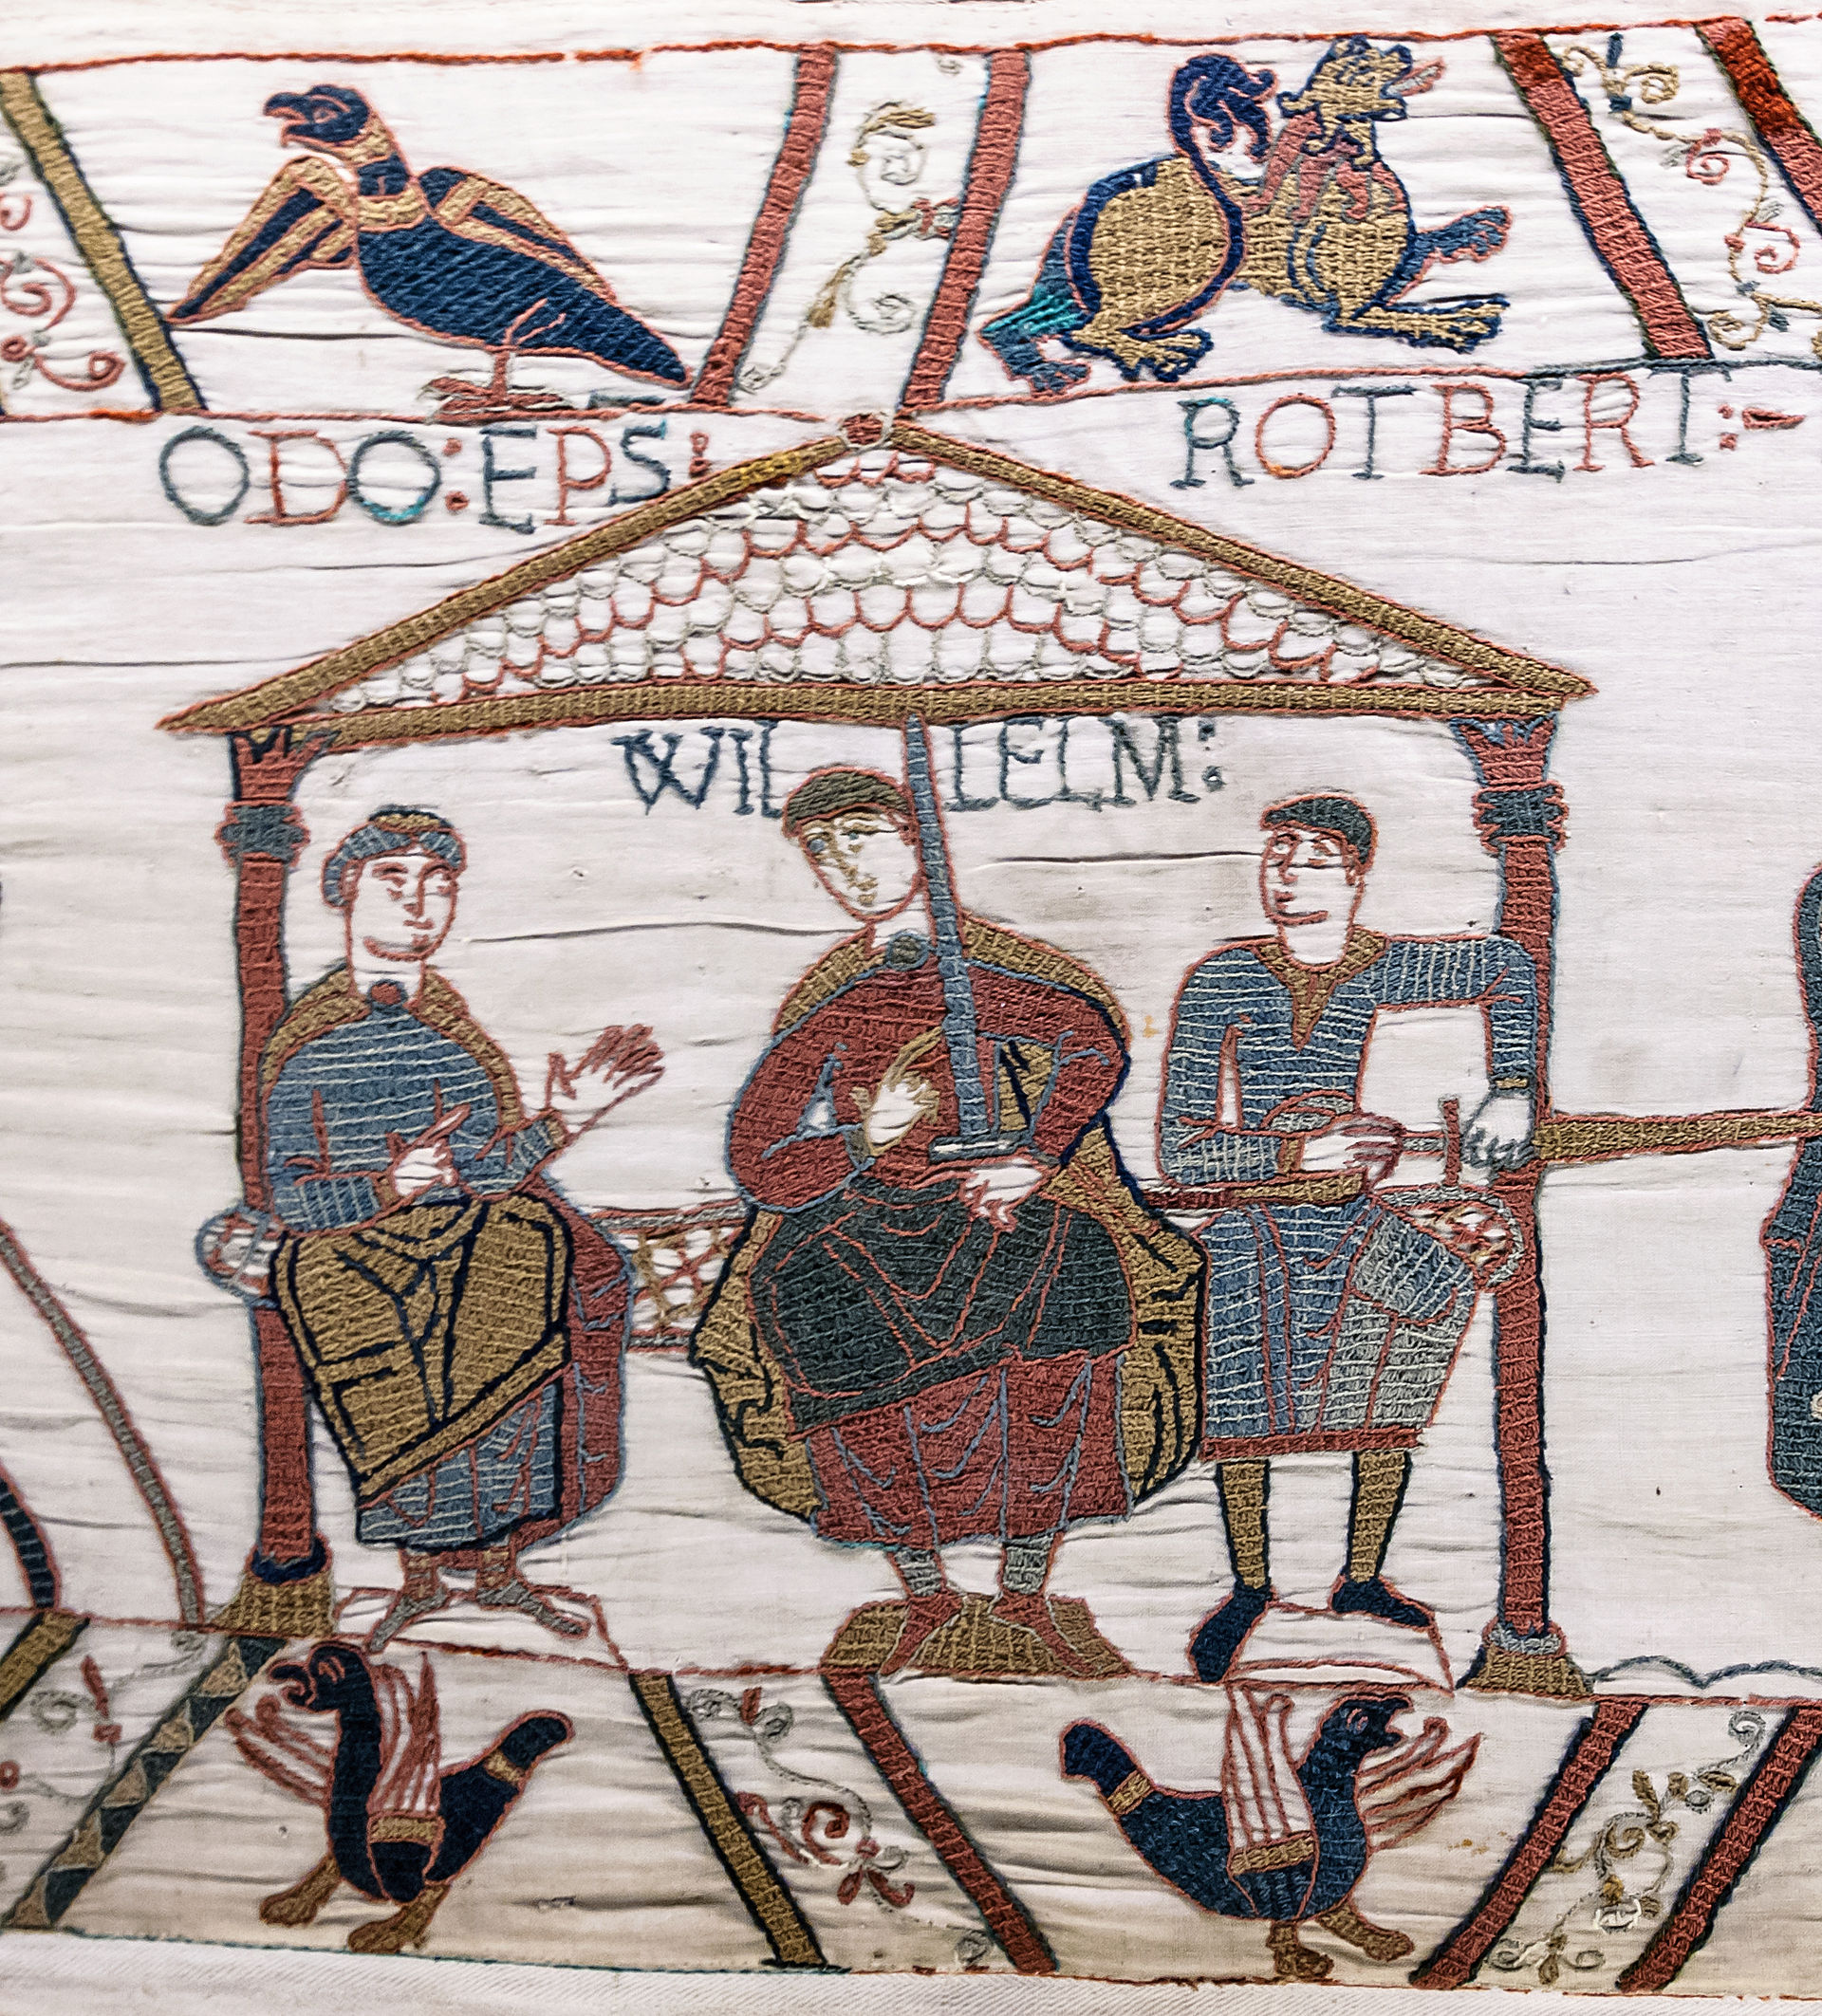 Bayeux_Tapestry_scene44_William_Odo_Robert.jpg